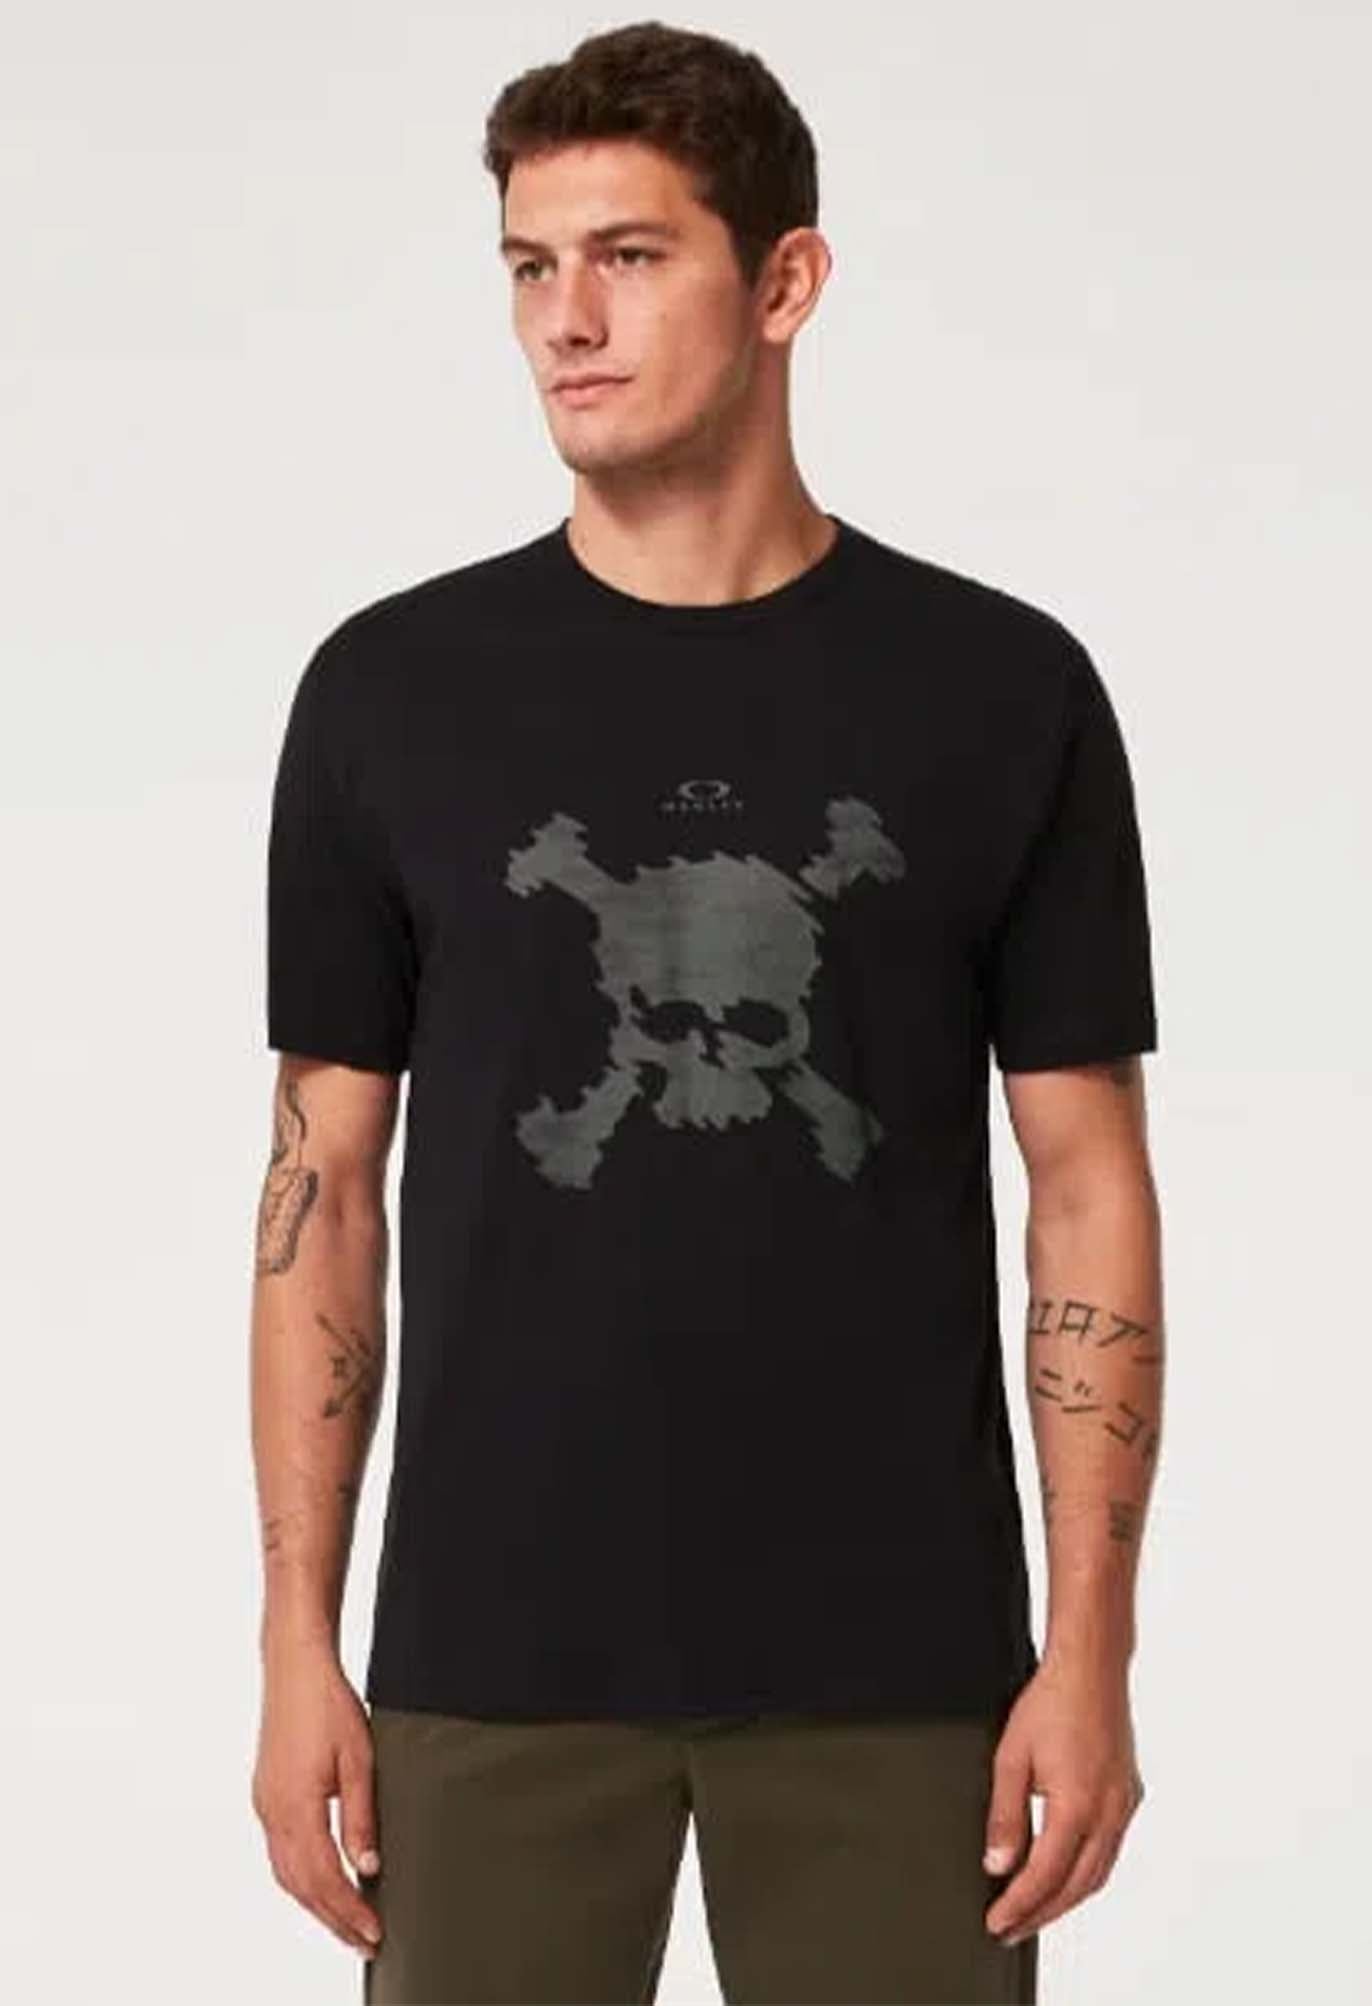 Oakley Camo Skull Tee shirt, blackout